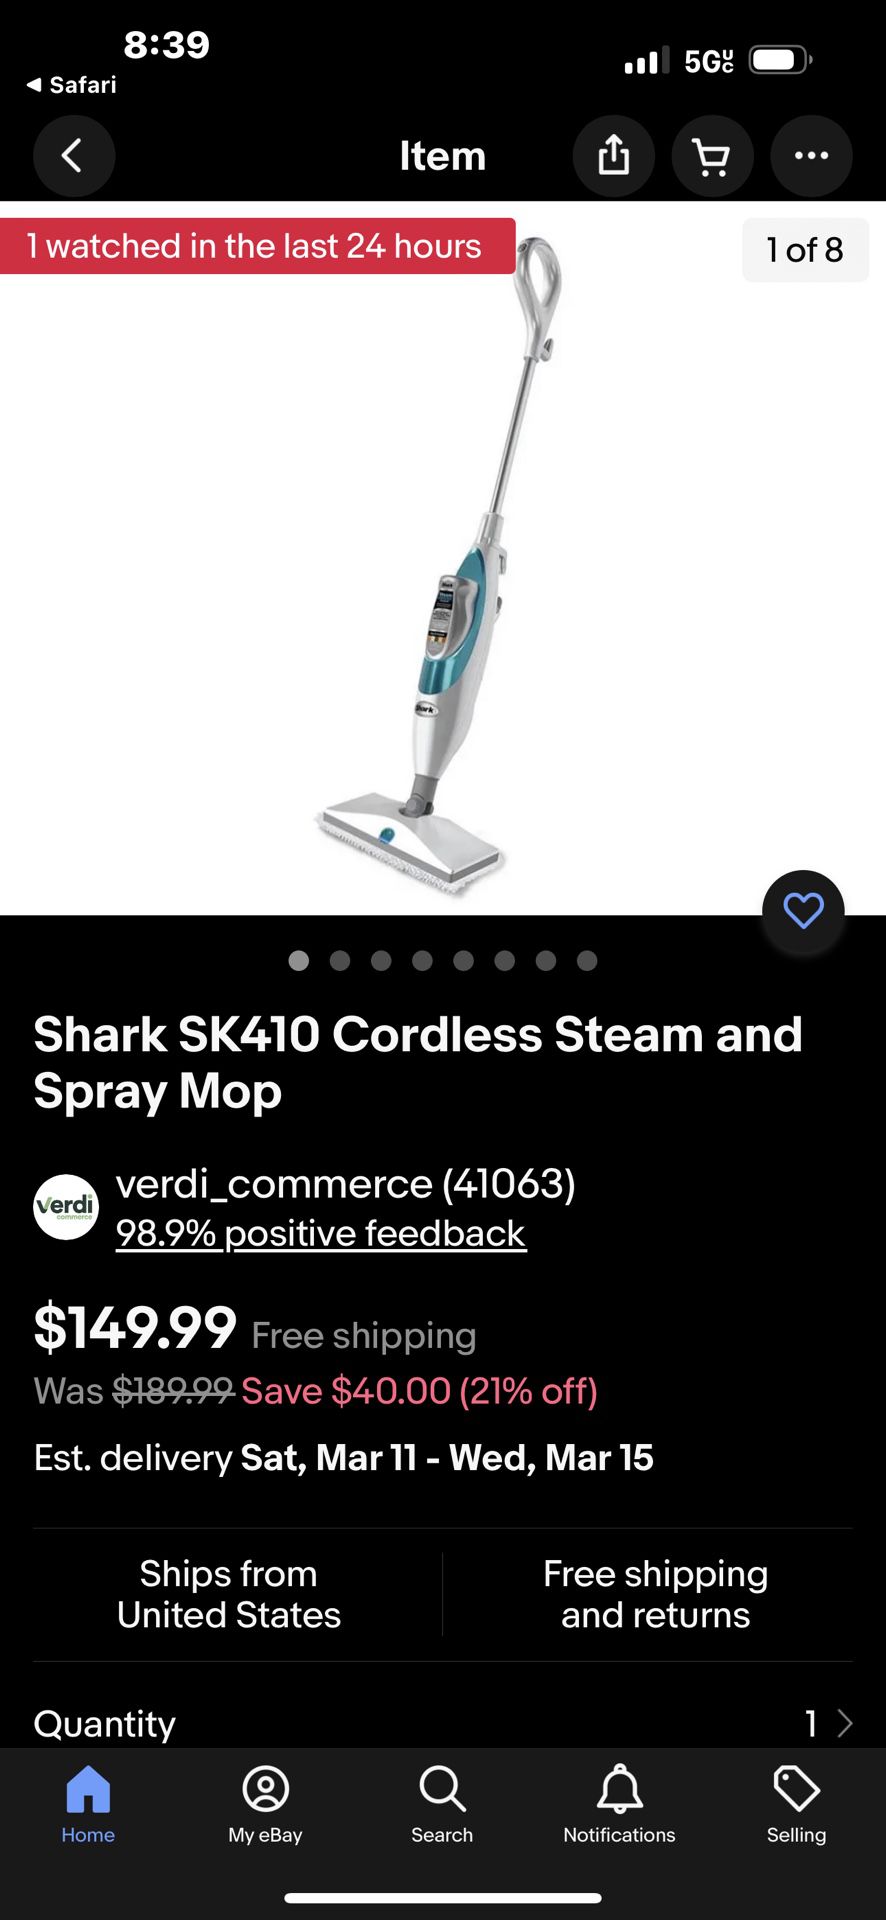 Shark SK410 Cordless Steam and Spray Mop